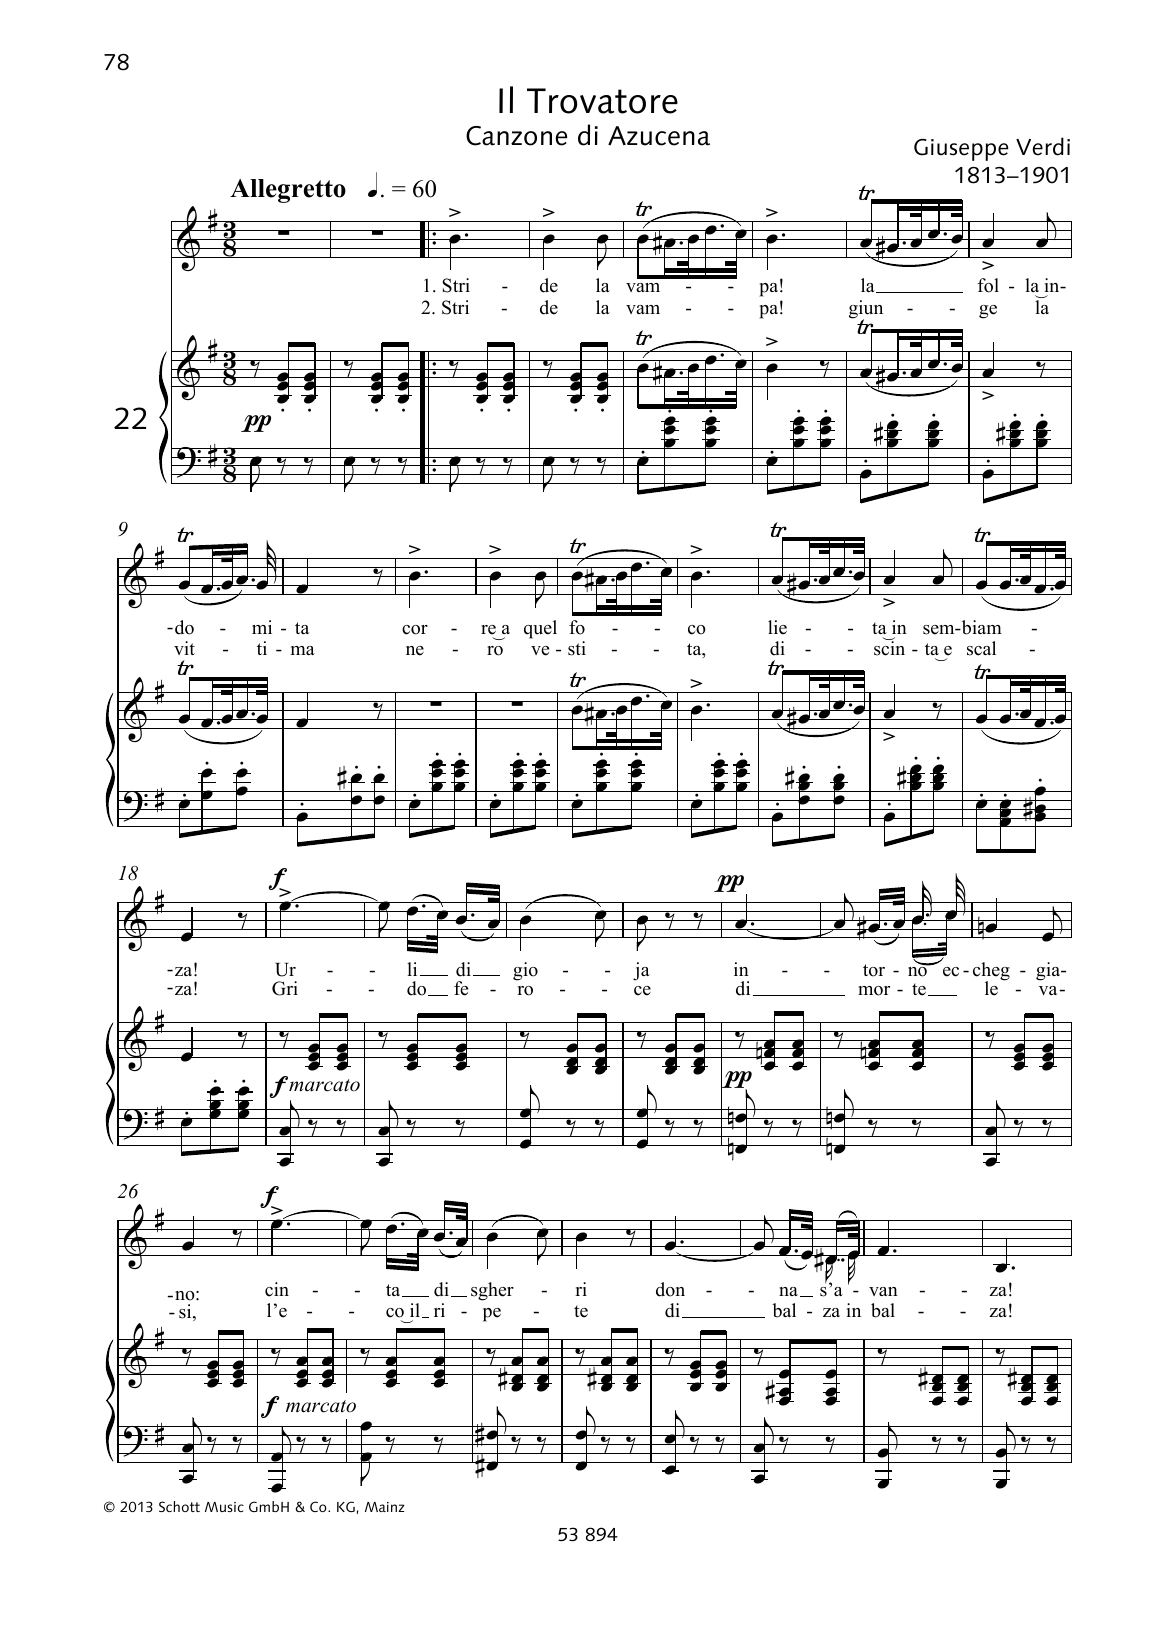 Giuseppe Verdi Stride la vampa! Sheet Music Notes & Chords for Piano & Vocal - Download or Print PDF